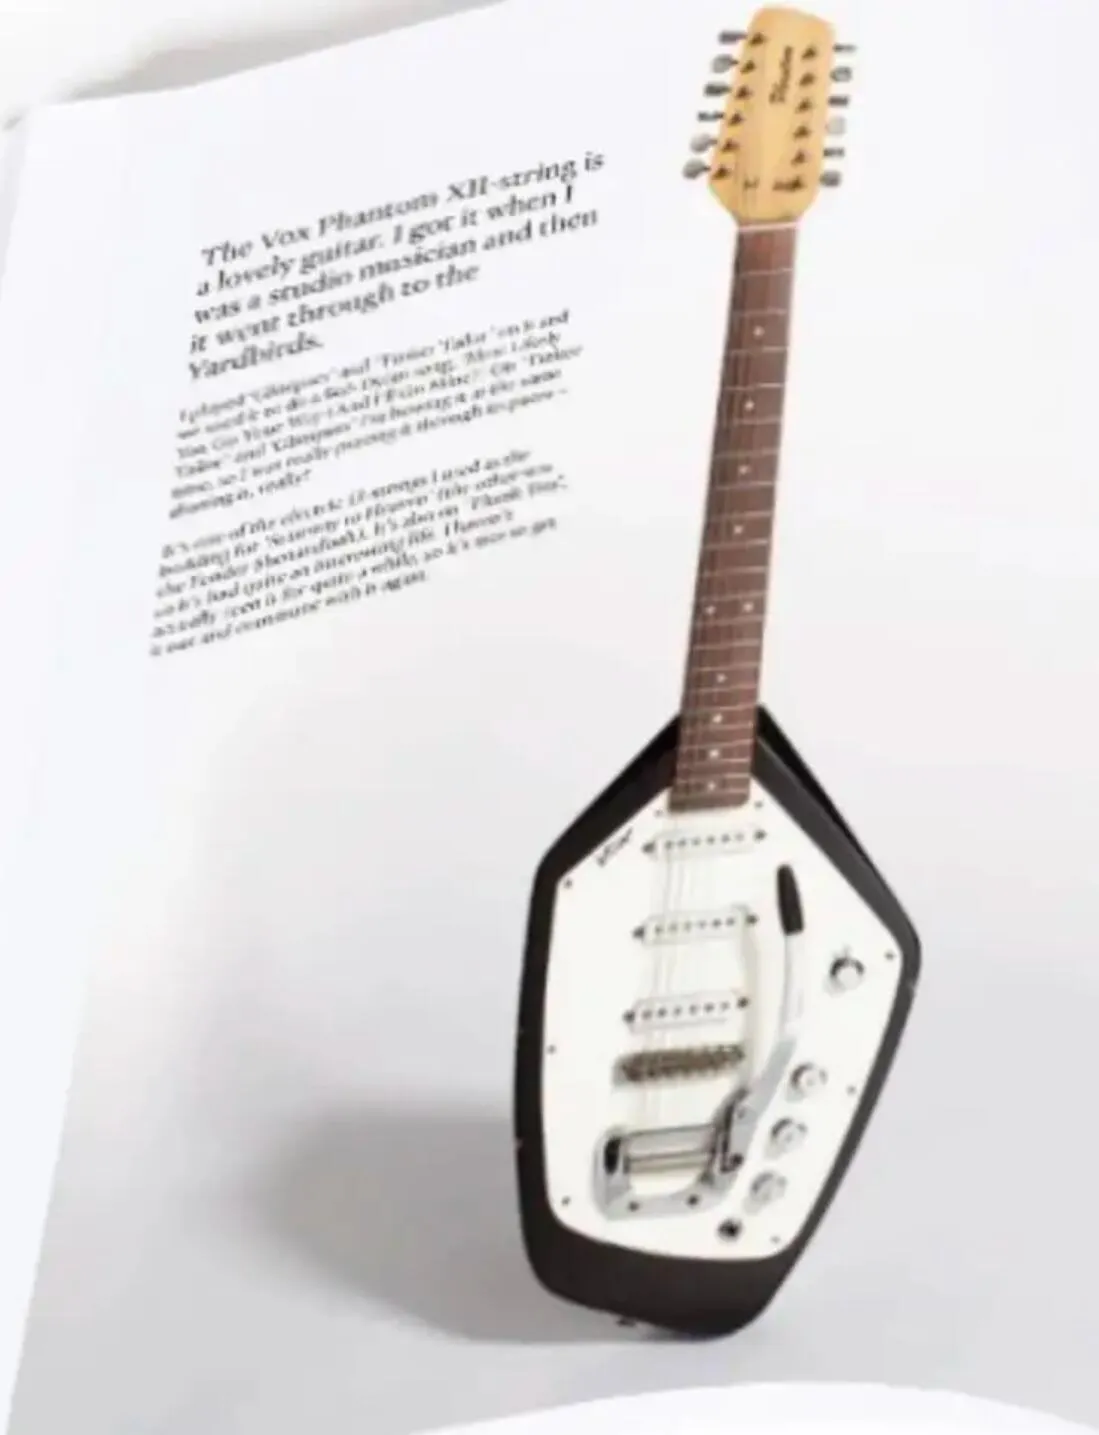 En stock Vox Phantom XII Tuxedo Jimmy Page Yardbirds Teardrop 12 cordes Black Solid Body Guitare électrique SSS Pickups Bigs Tremolo Vibrola Vintage Tuners